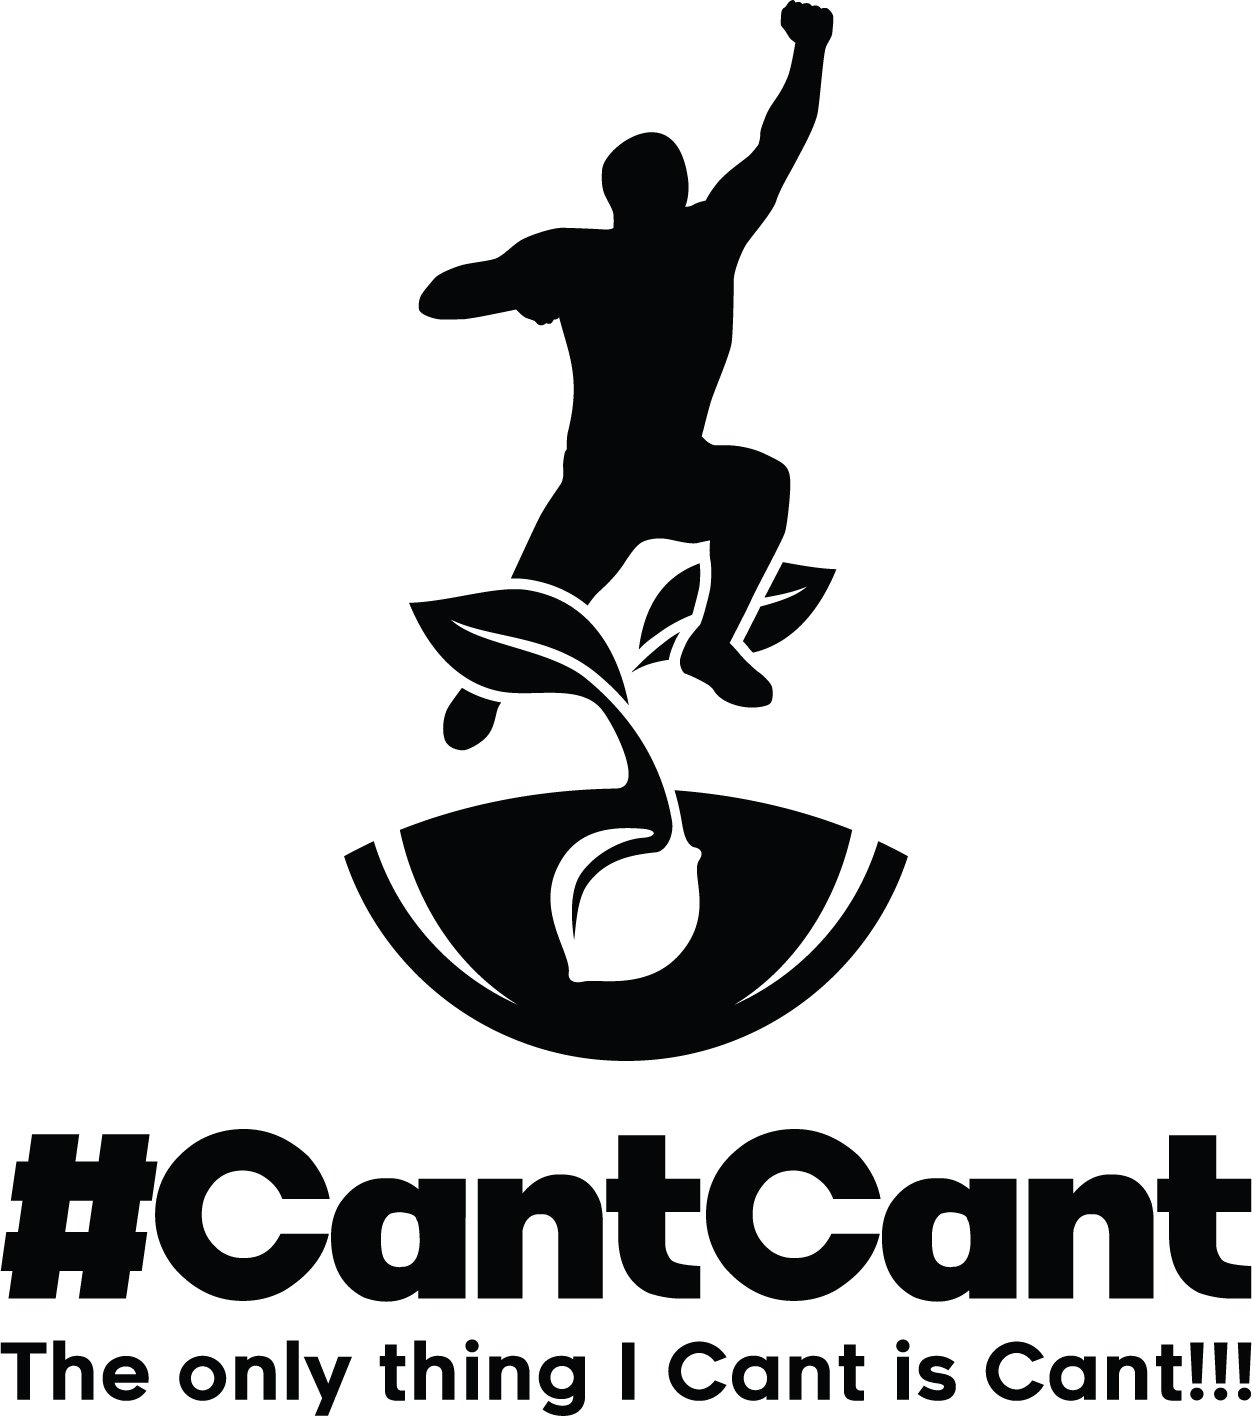 Cantcant.org